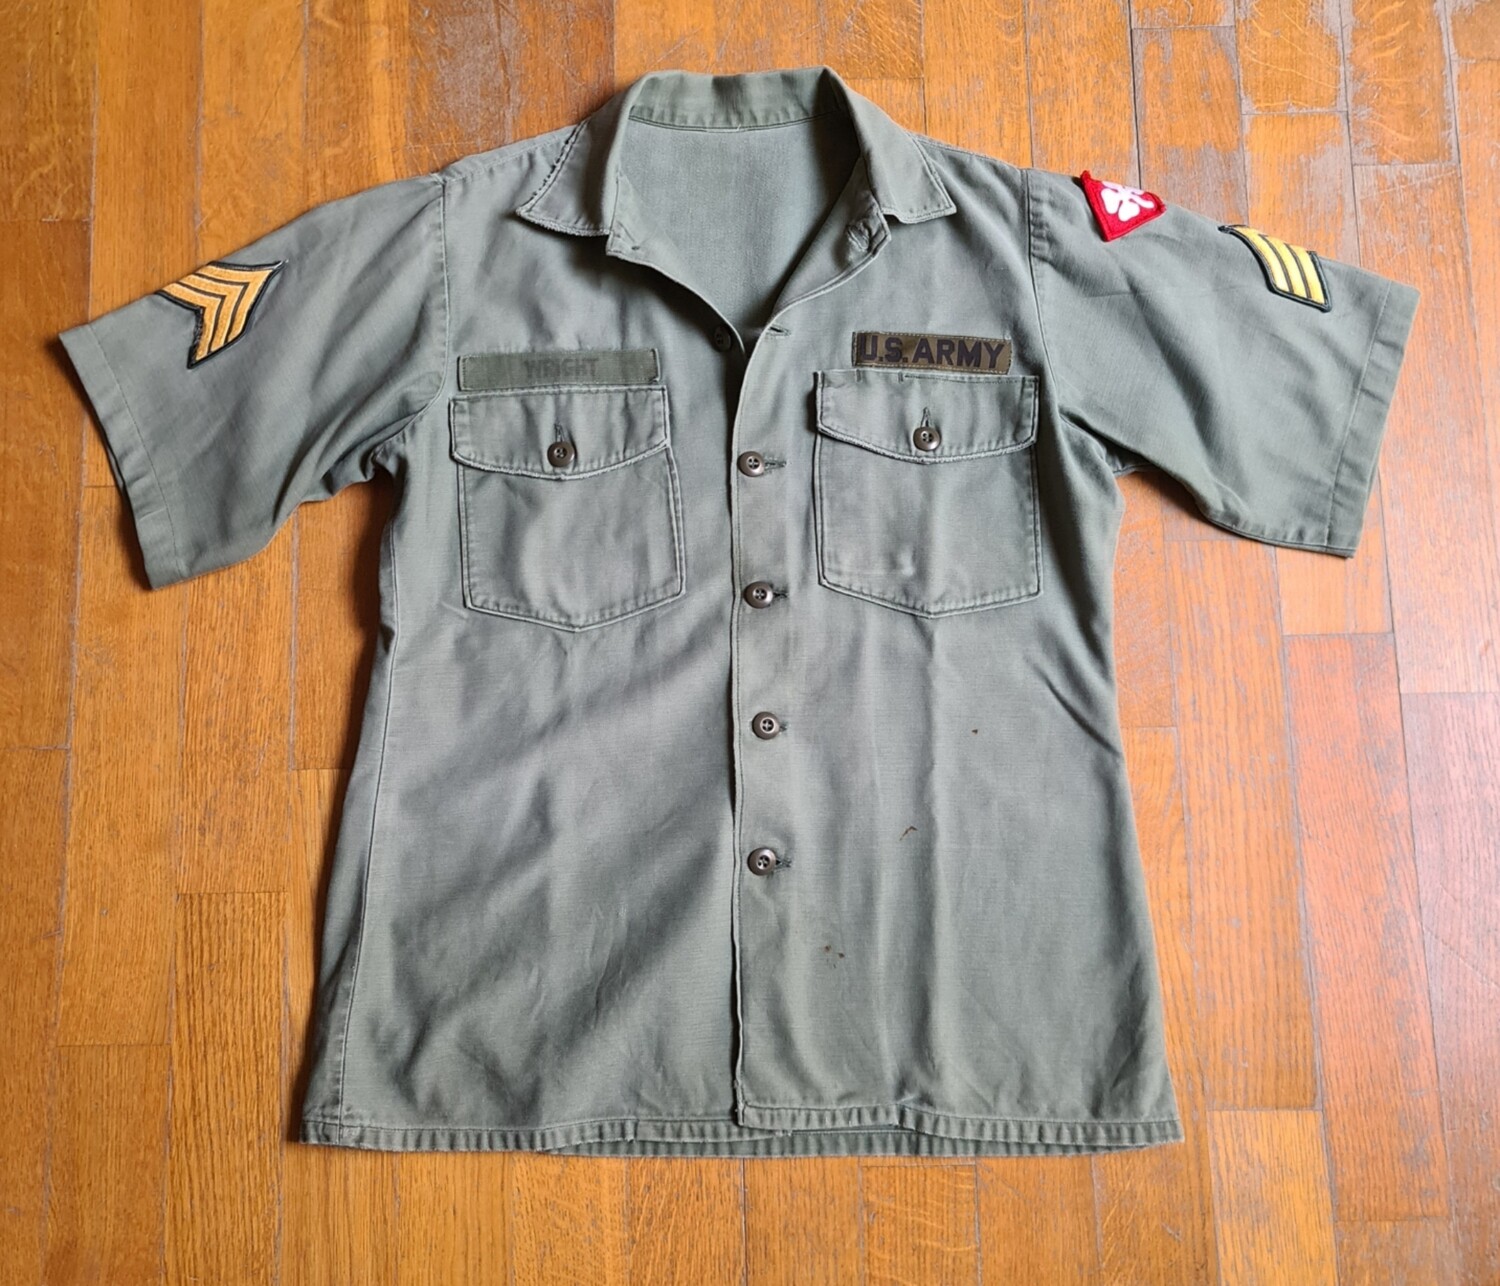 US Army shirt OG107 short sleeve